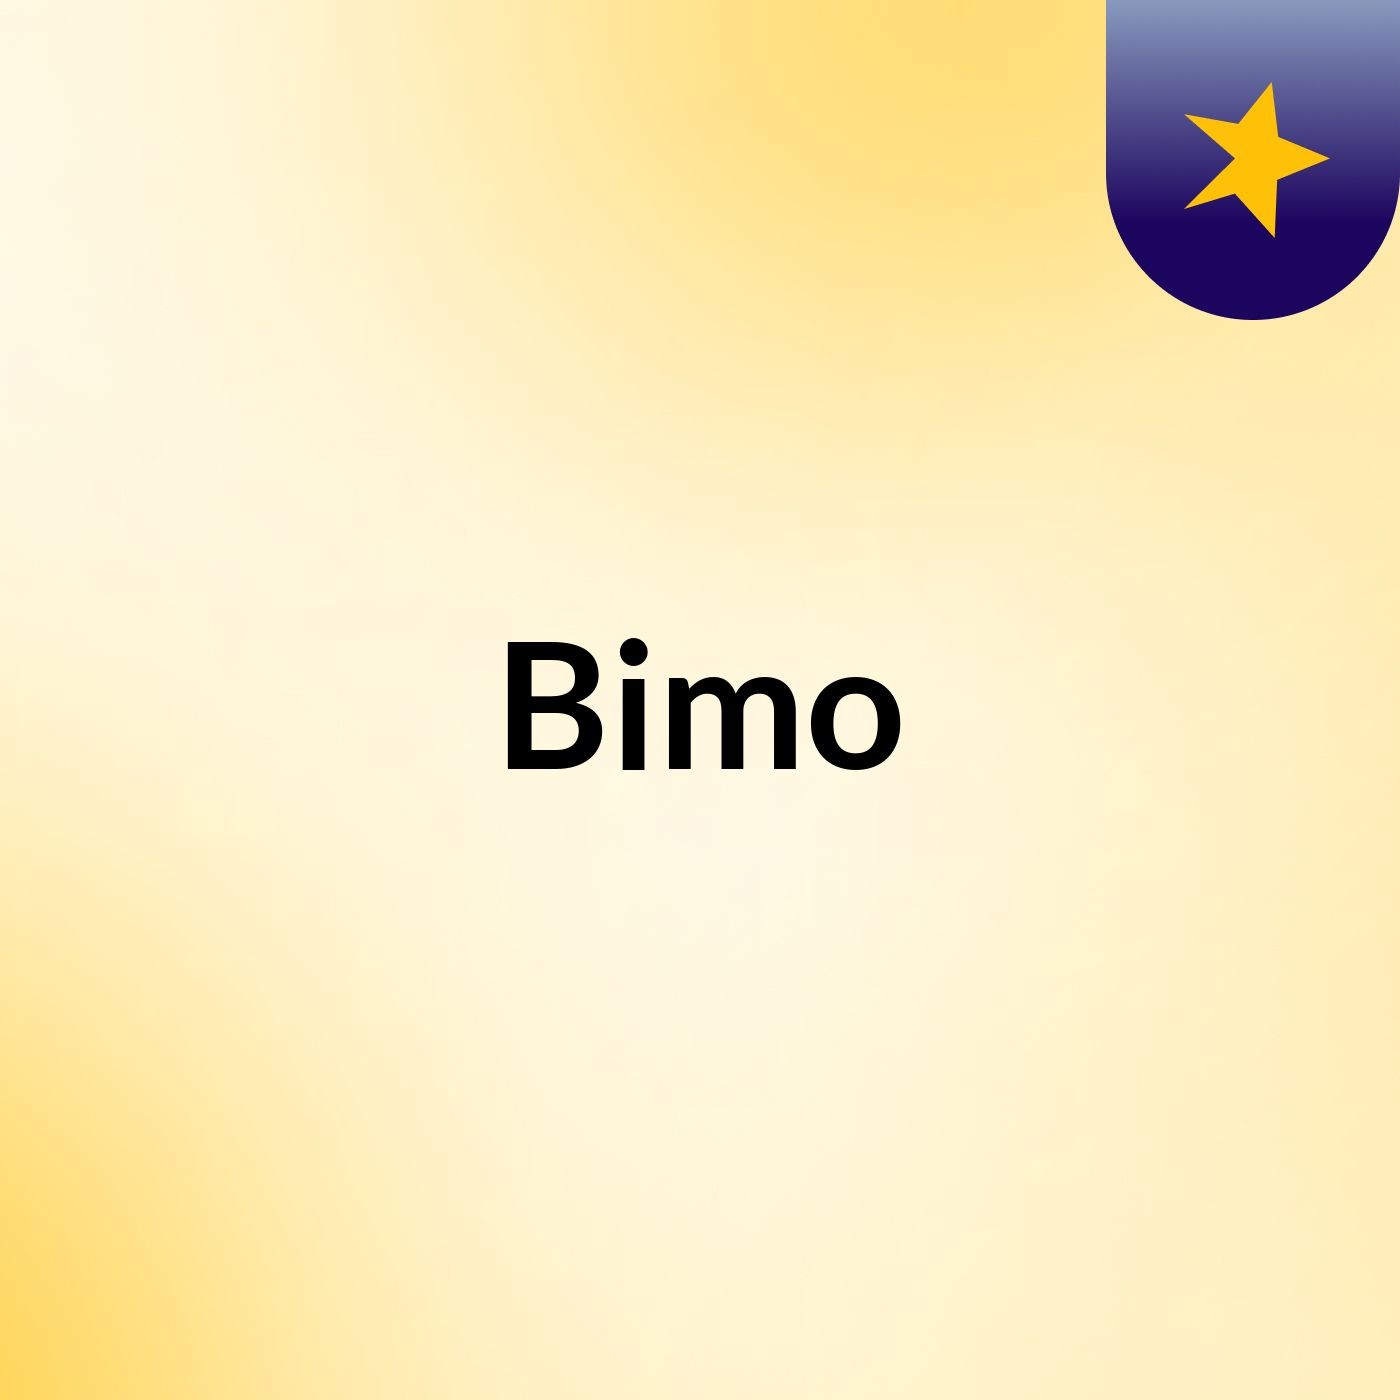 Bimo